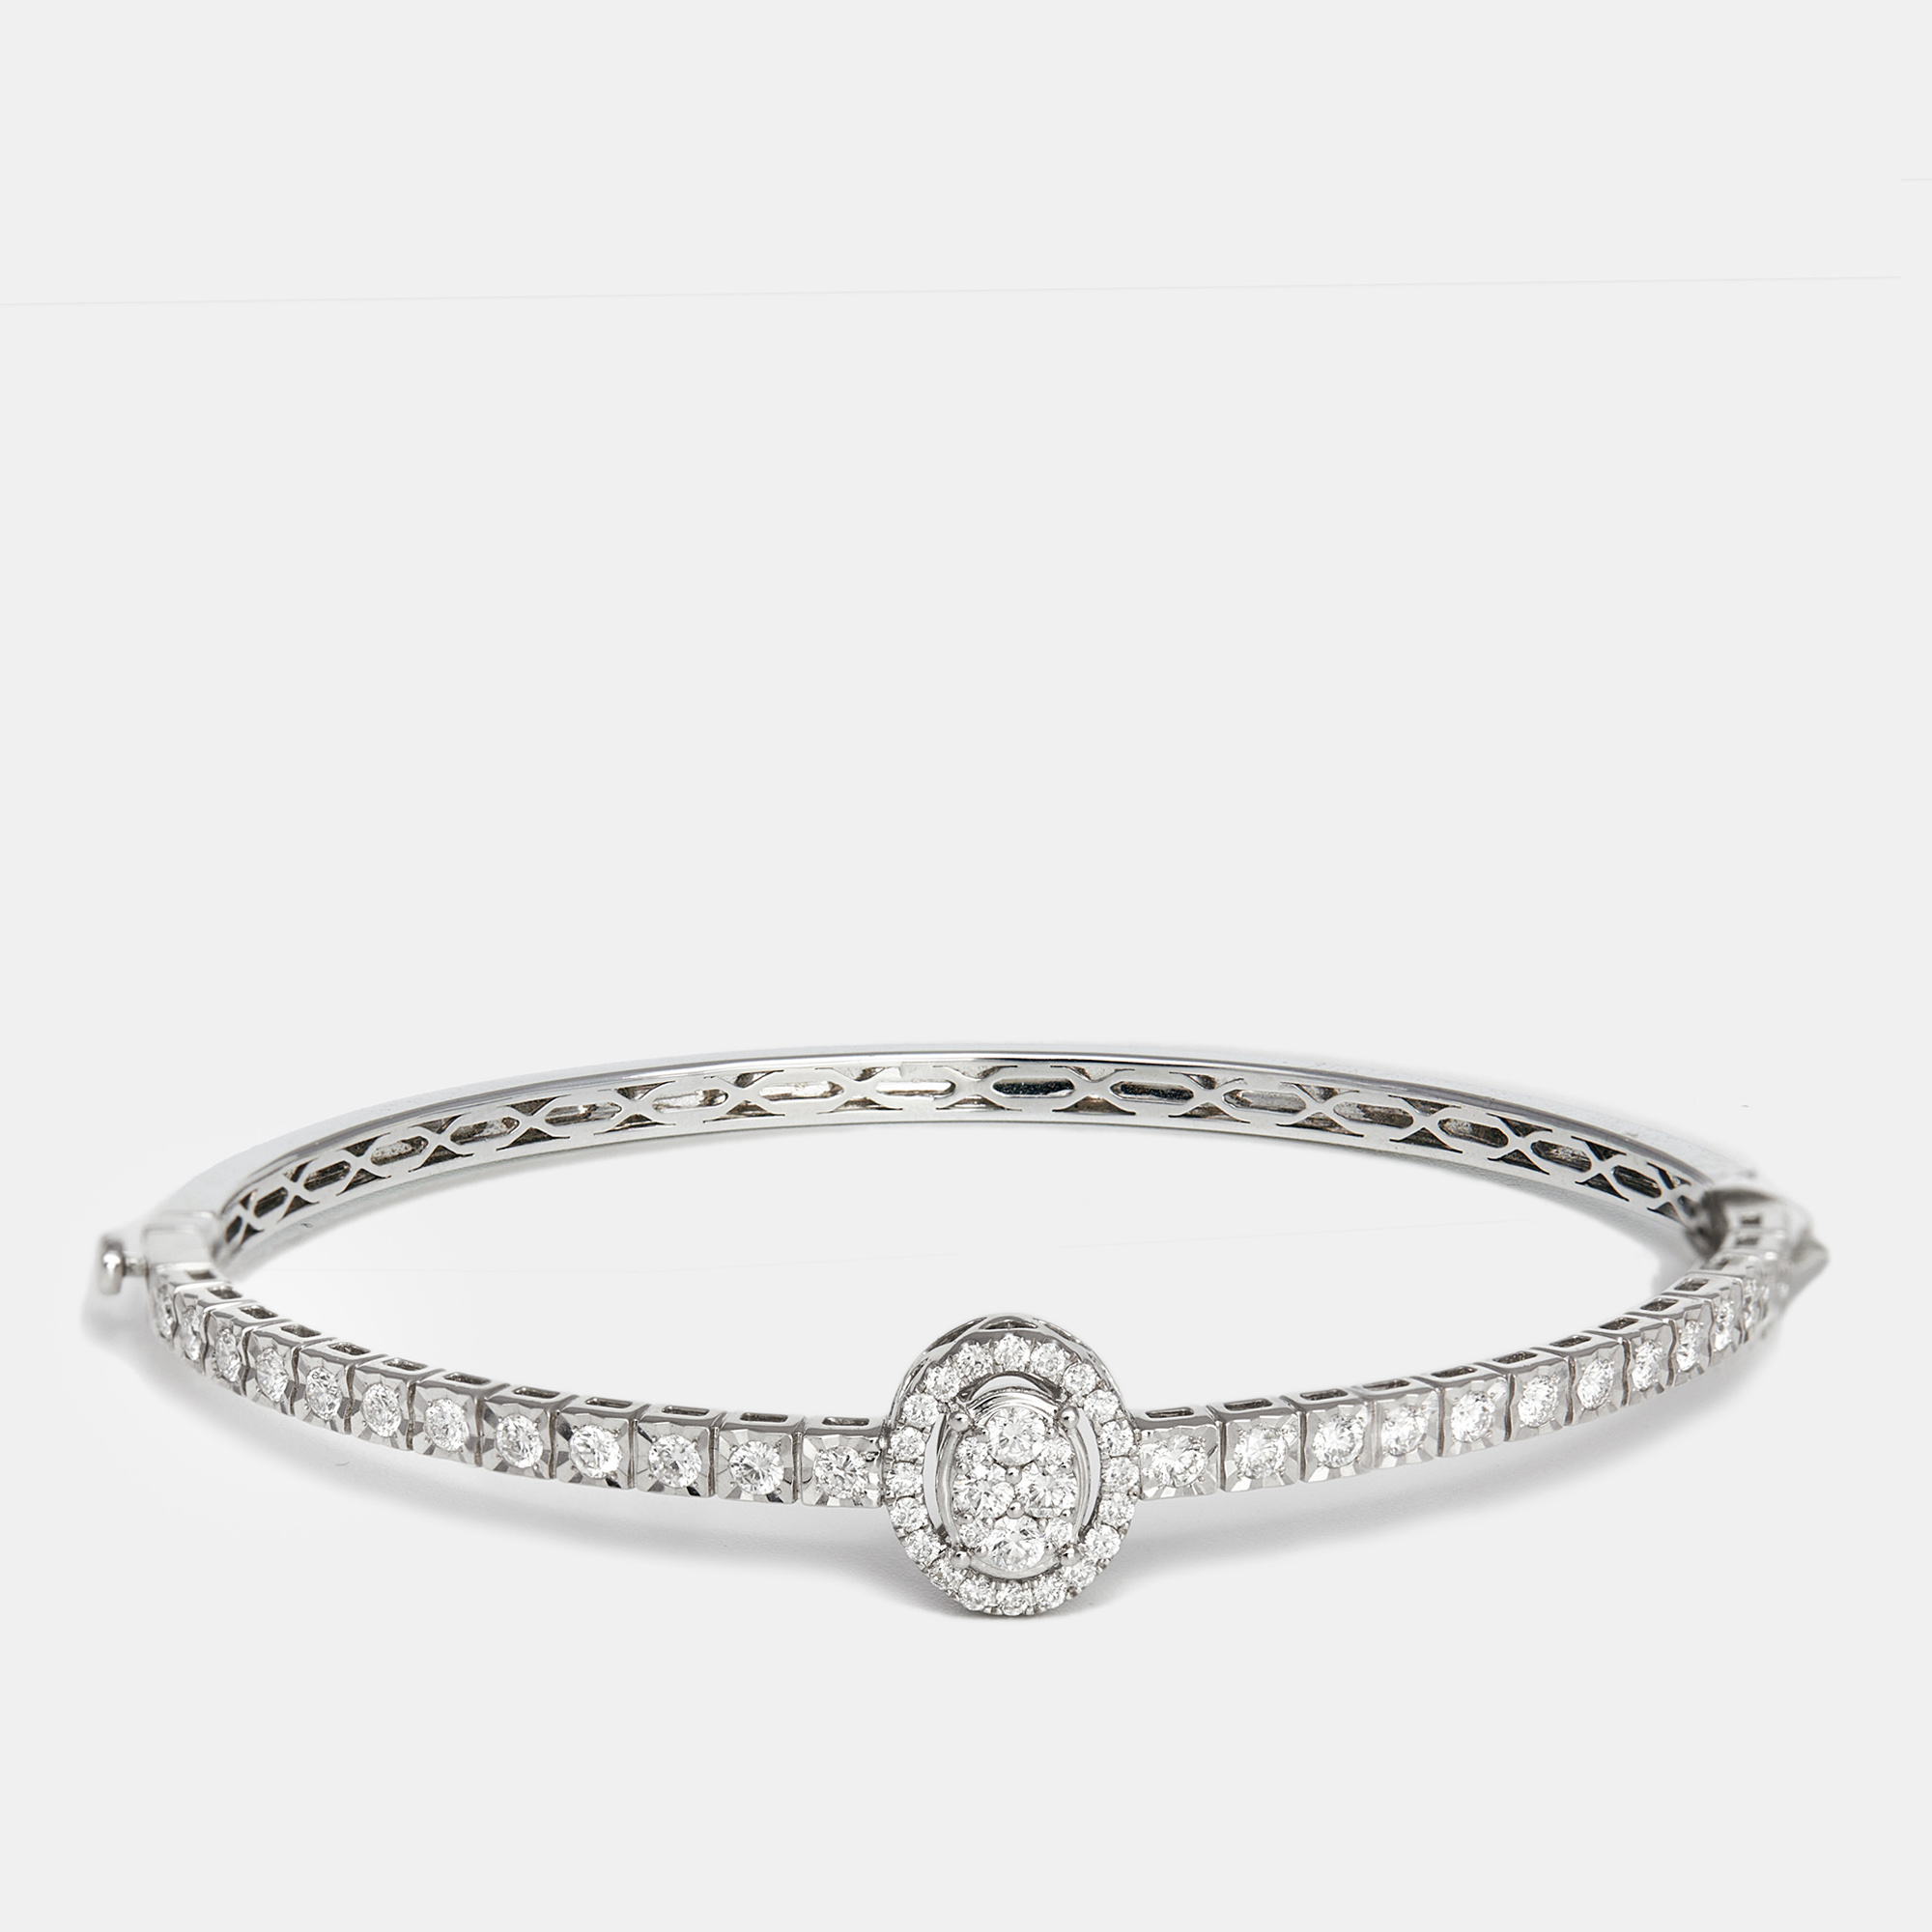 The diamond edit elegant round diamond 1.03 ct 18k white gold bracelet 16